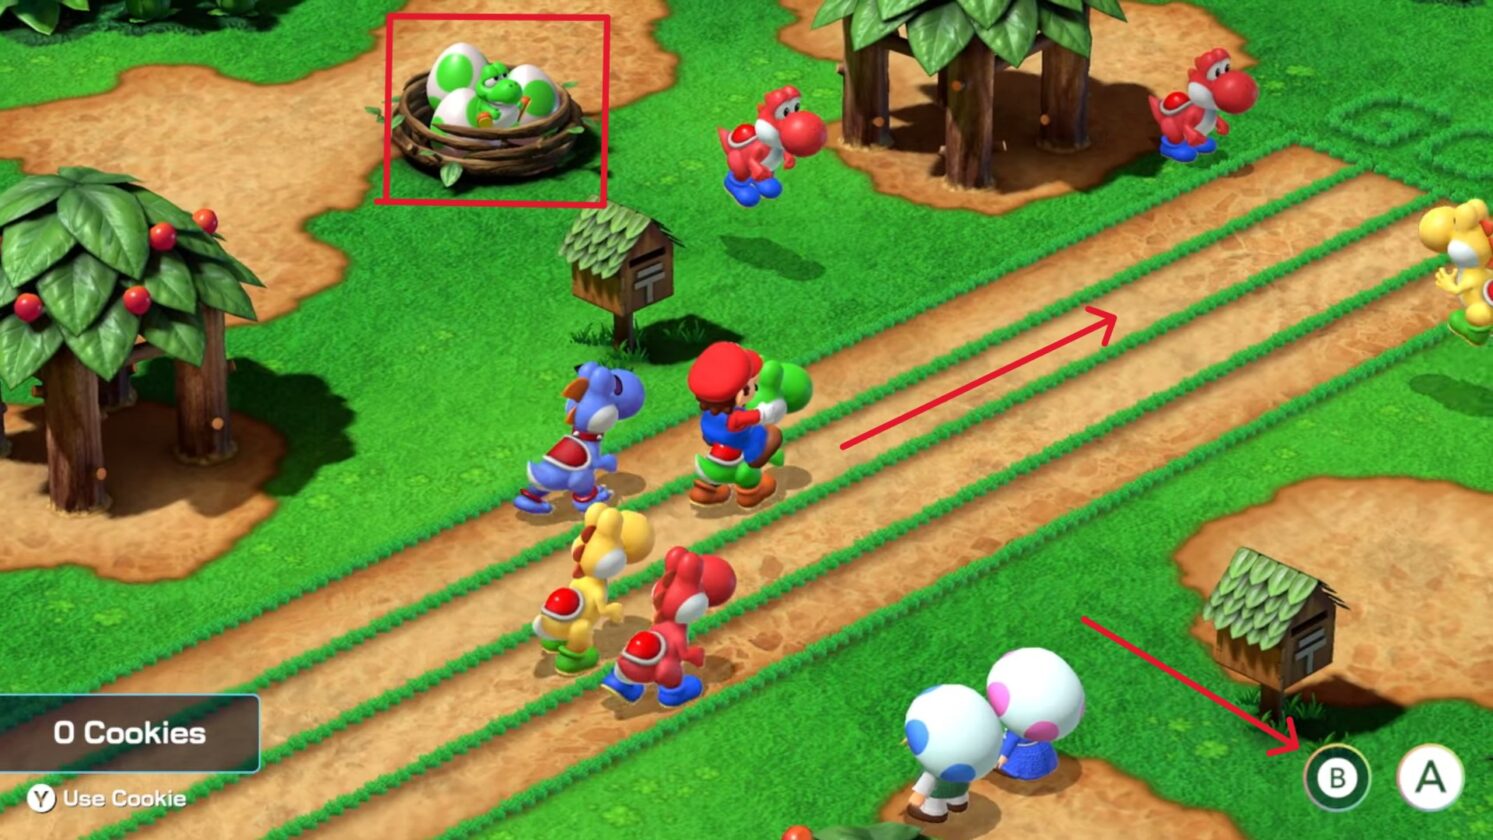 Win the Yoshi race in Super Mario RPG